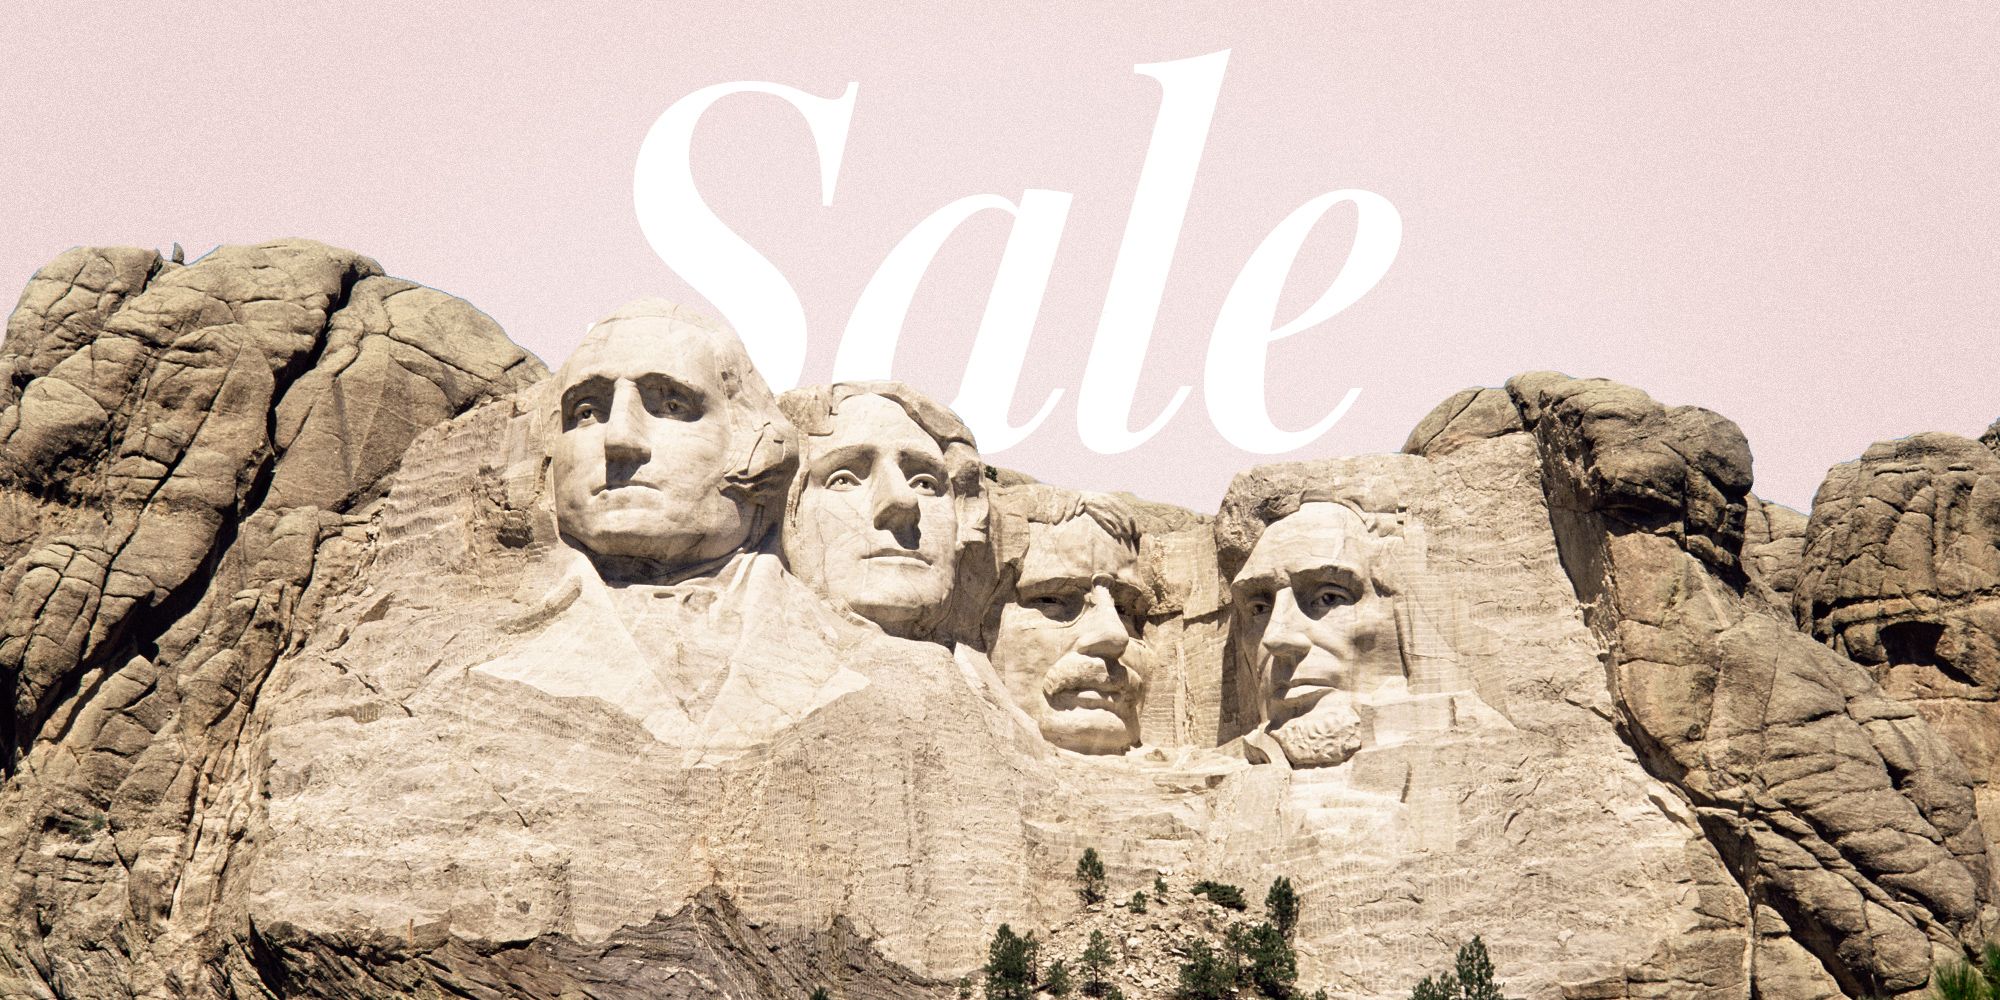 nike president day sale